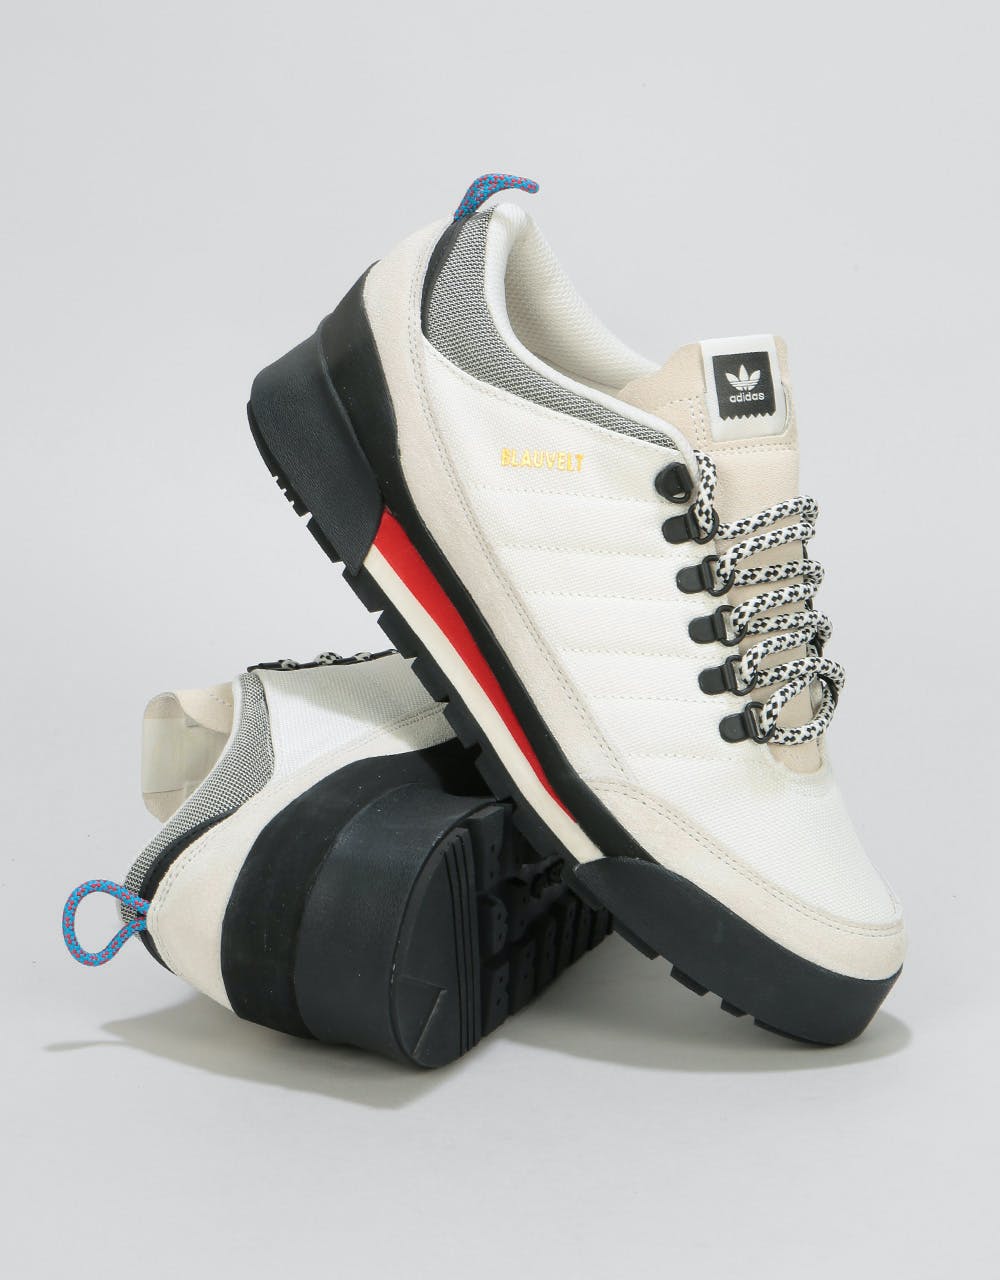 Adidas Jake Boot 2.0 Low - Off White/Raw White/Core Black